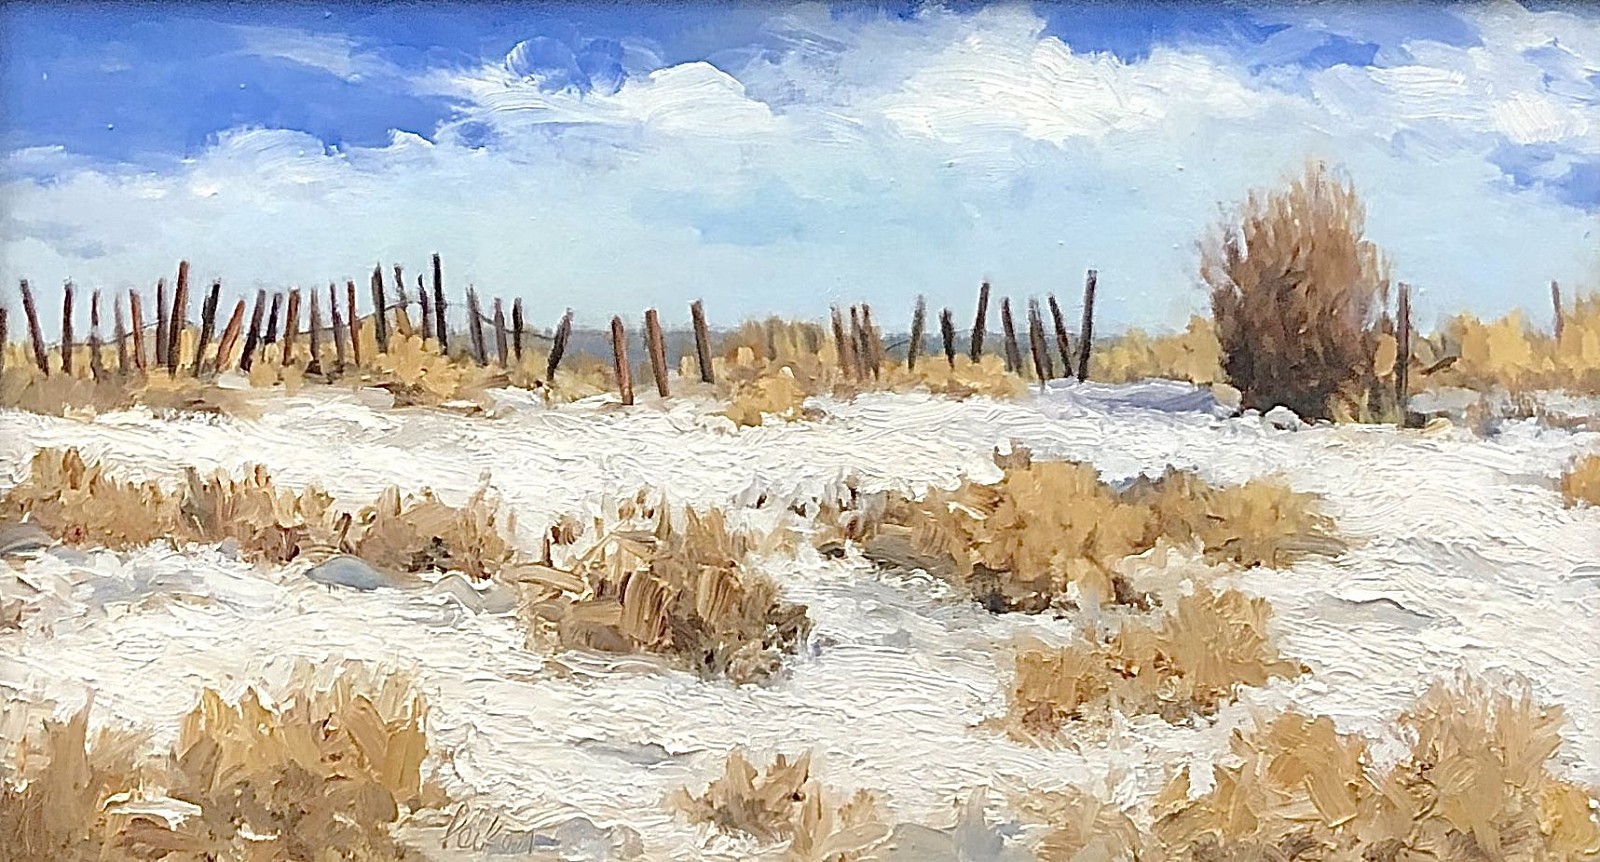 David Peikon, Winter Beach Walk, 2020
oil on panel, 6 x 12 in. (15.2 x 30.5 cm)
DP201106